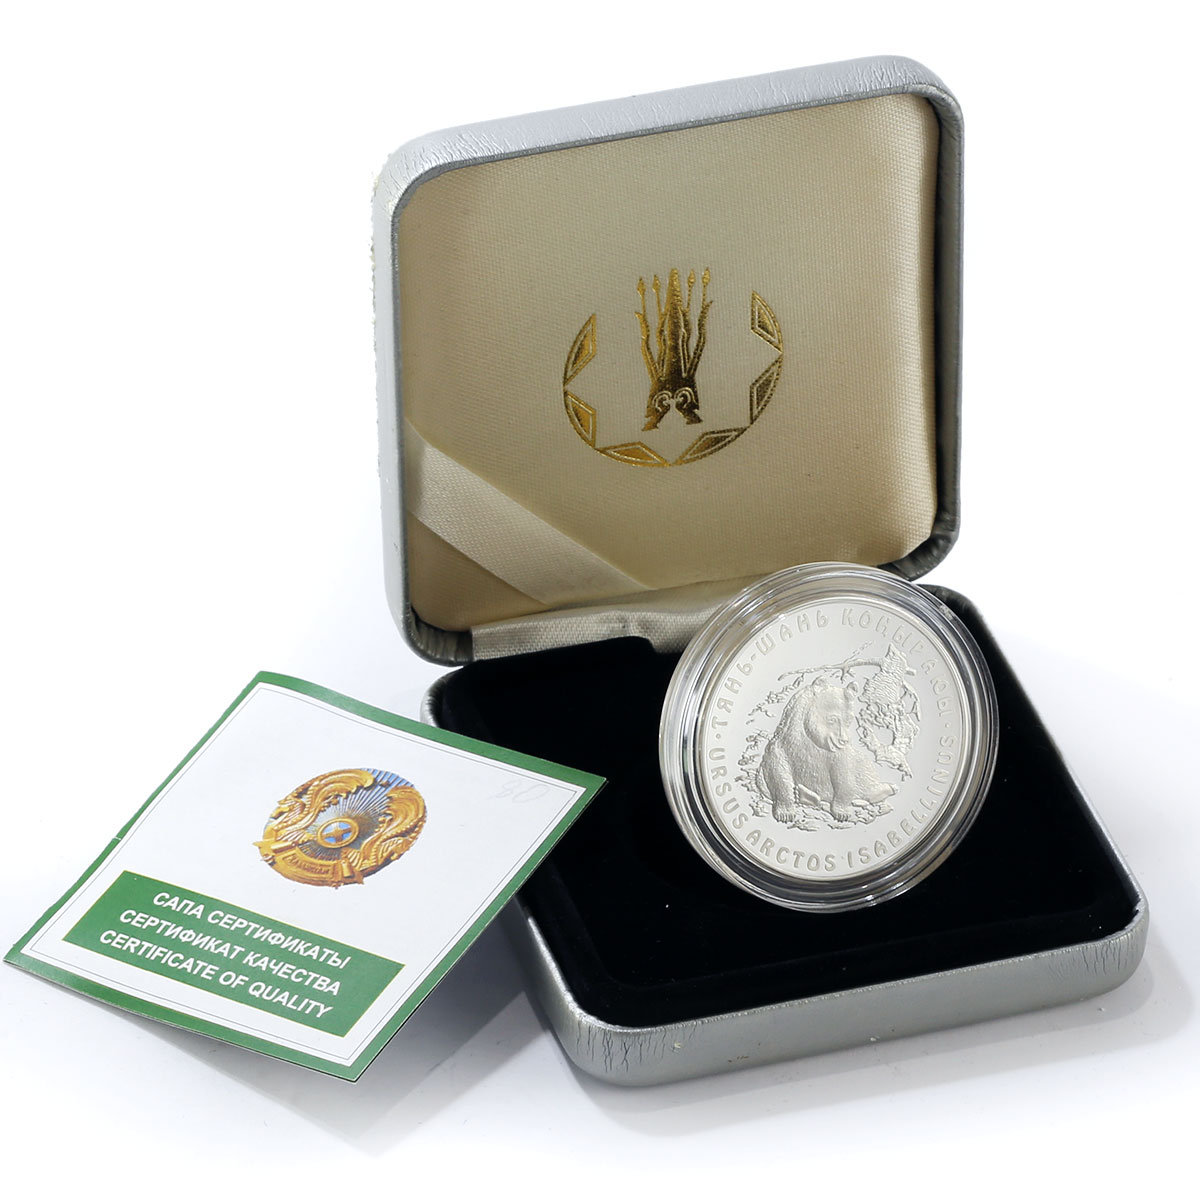 Kazakhstan 500 Tenge Himalaya Bear proof silver coin 2008